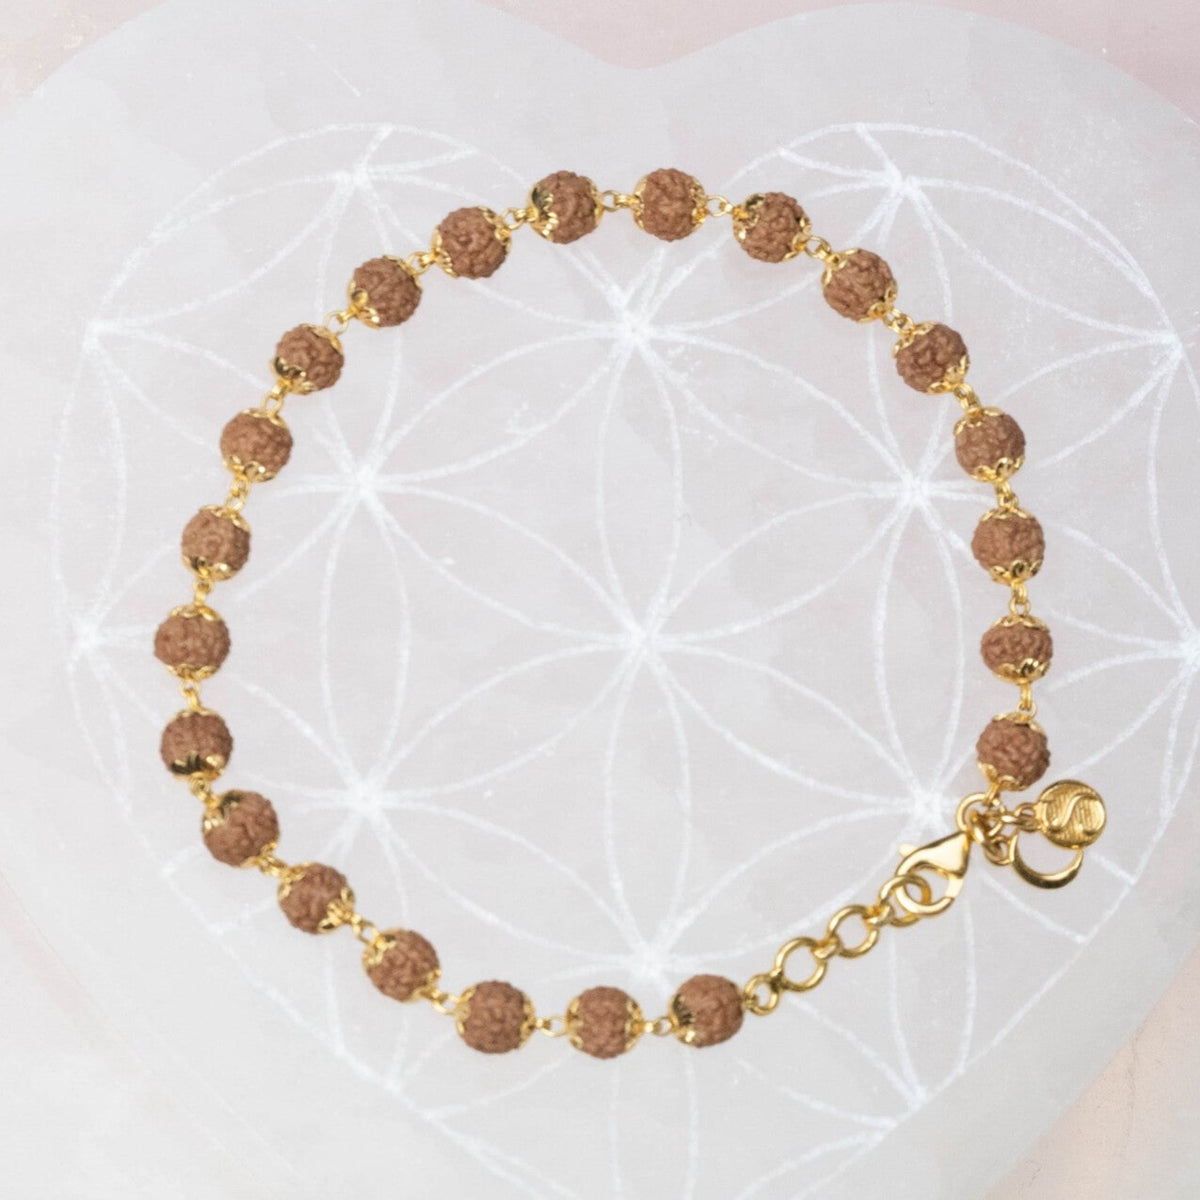 22k Yellow gold Rudraksha Bracelet with Diamond cut balls Unisex gold  jewelry14 | eBay